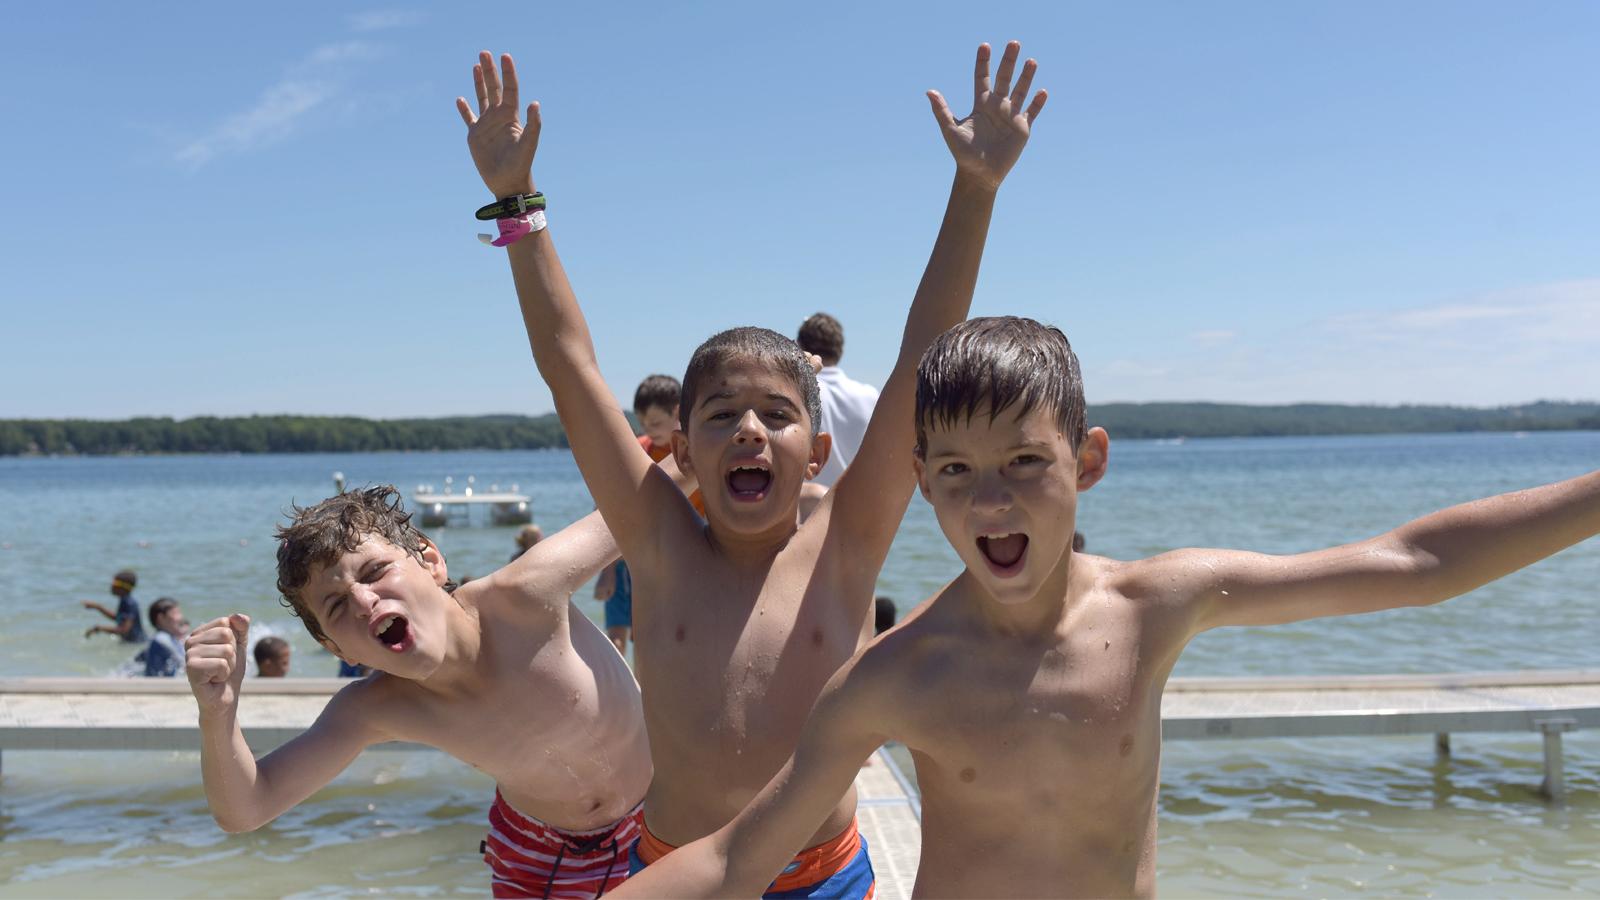 A group of boys near a lake